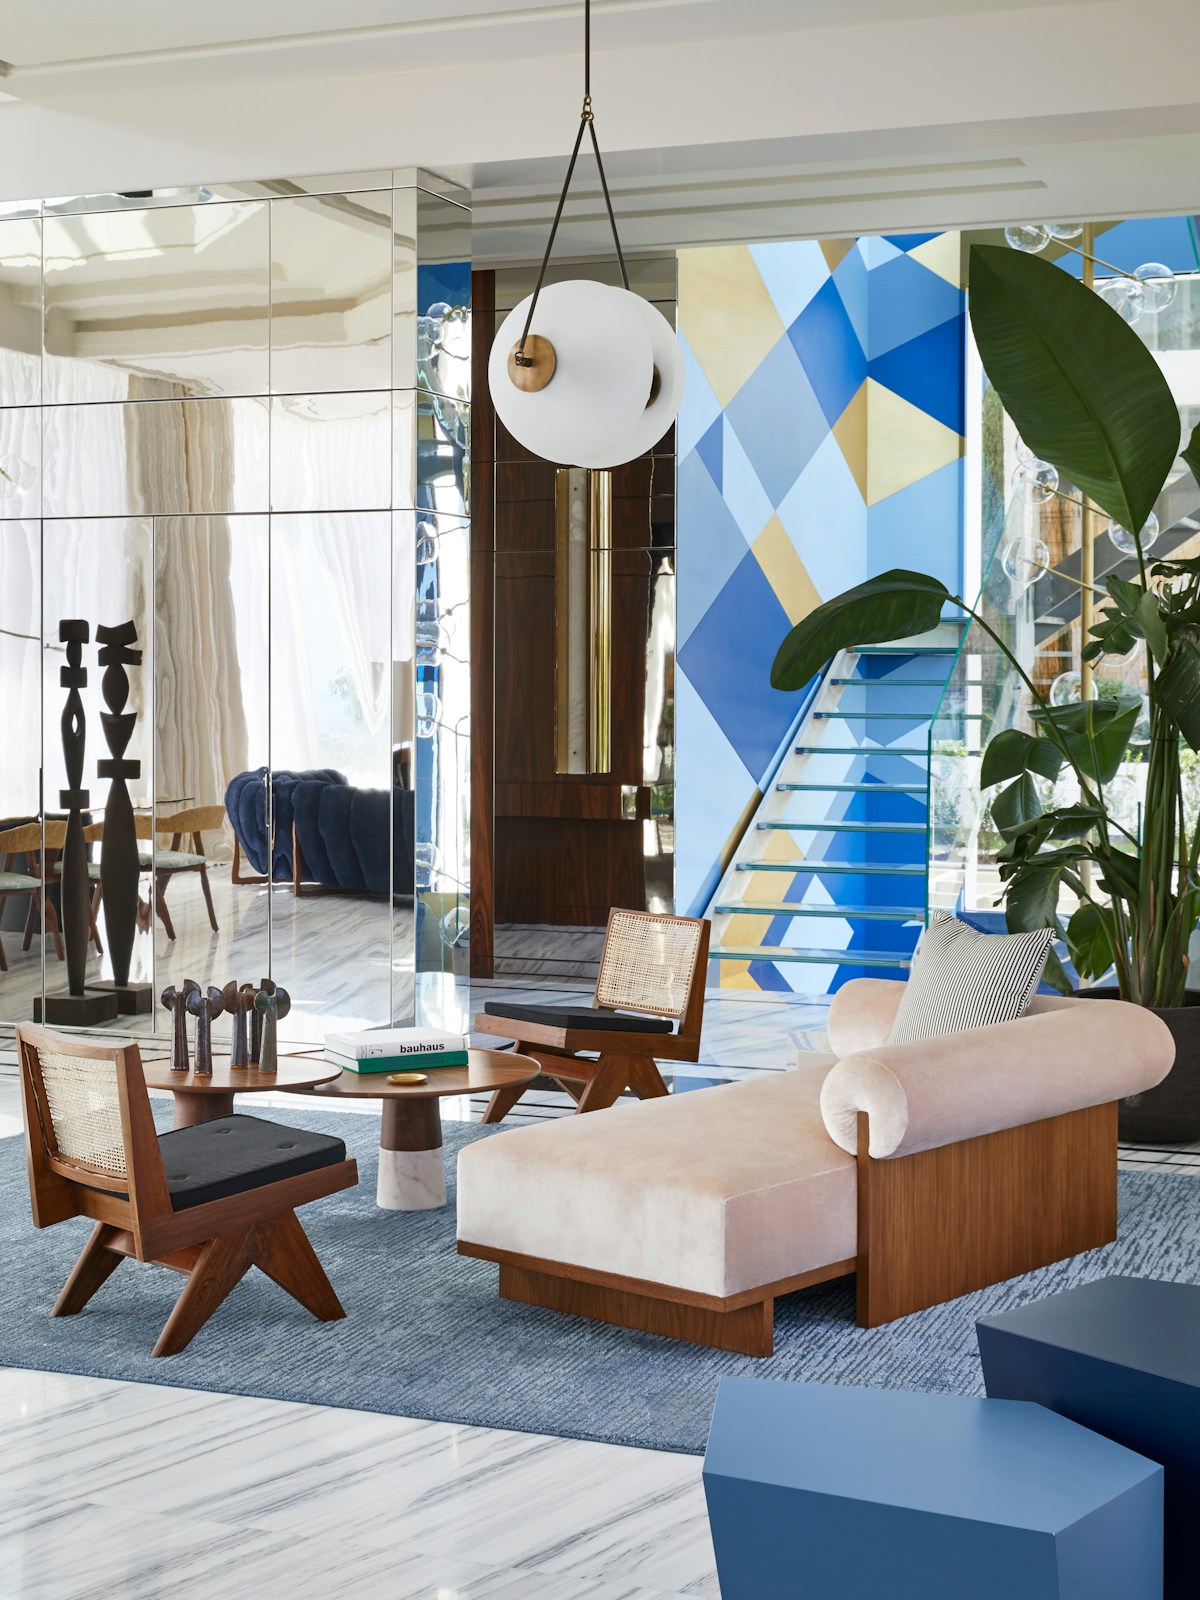 Humbert & Poyet Villa Odaya Mid-century Modern living area with blue rug, chaise lounge, geometric design on stairwell